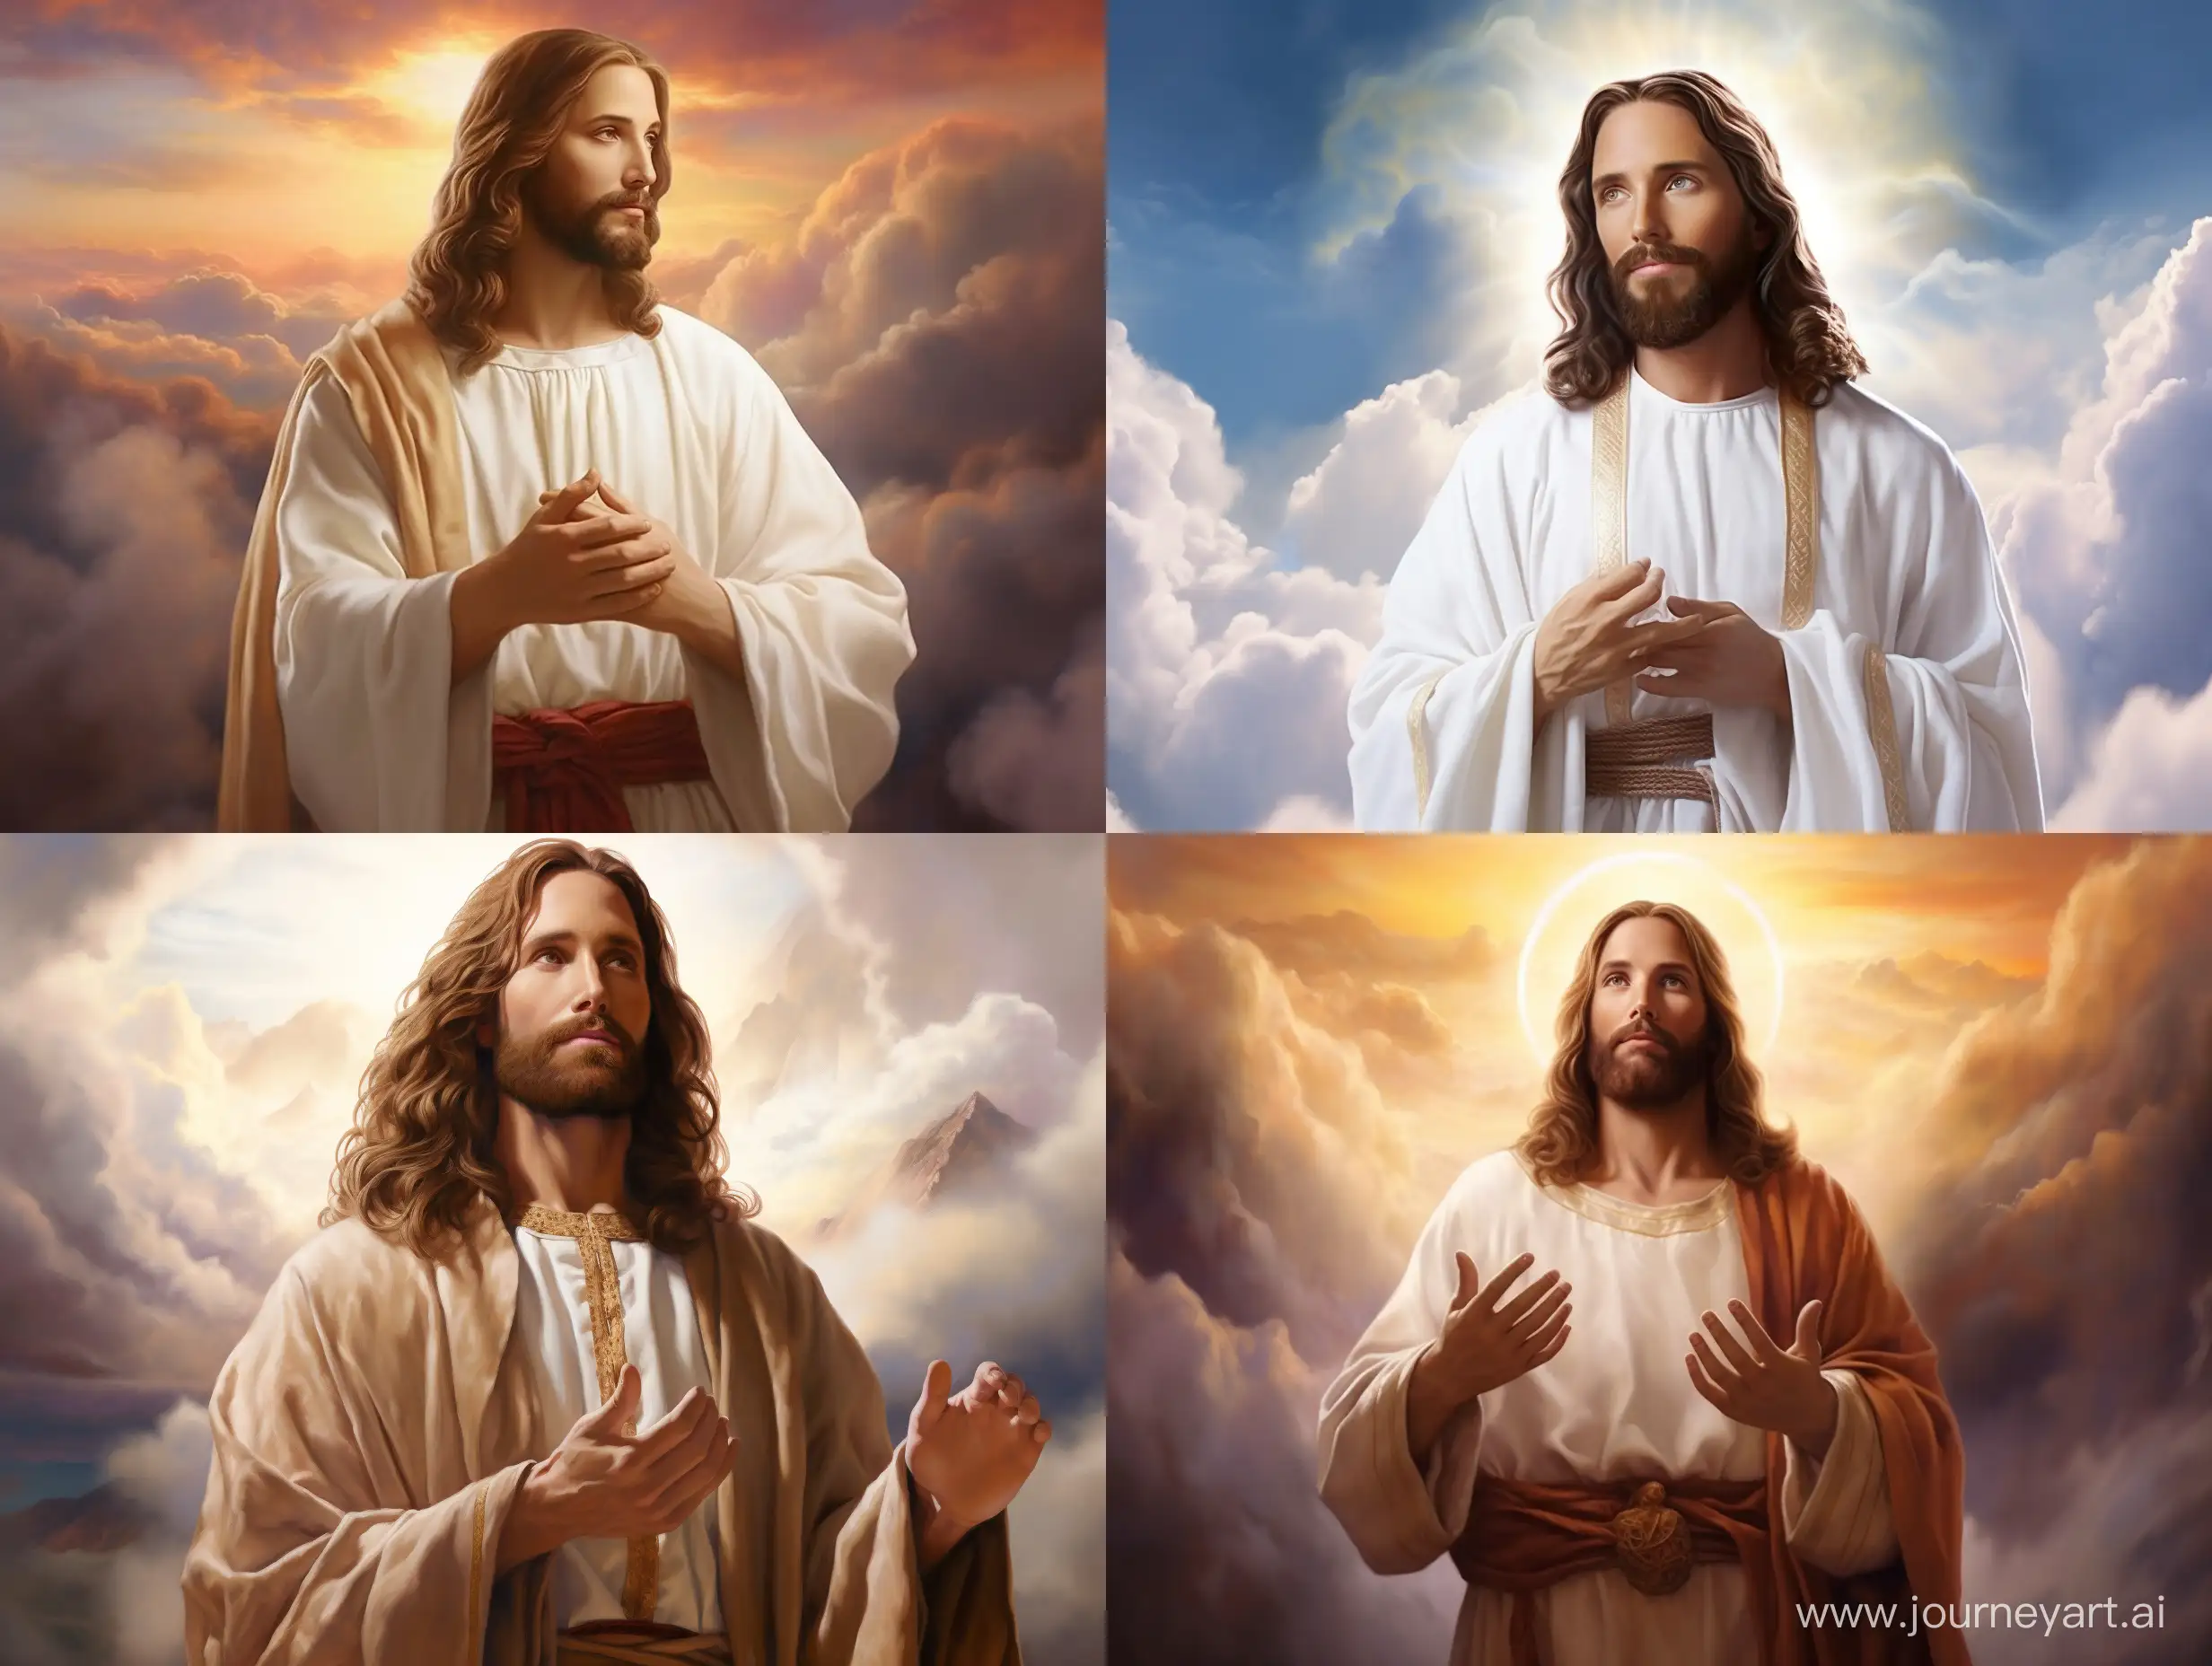 Divine-Moment-Jesus-Christ-Gazing-Amidst-Clouds-with-Heartfelt-Gesture